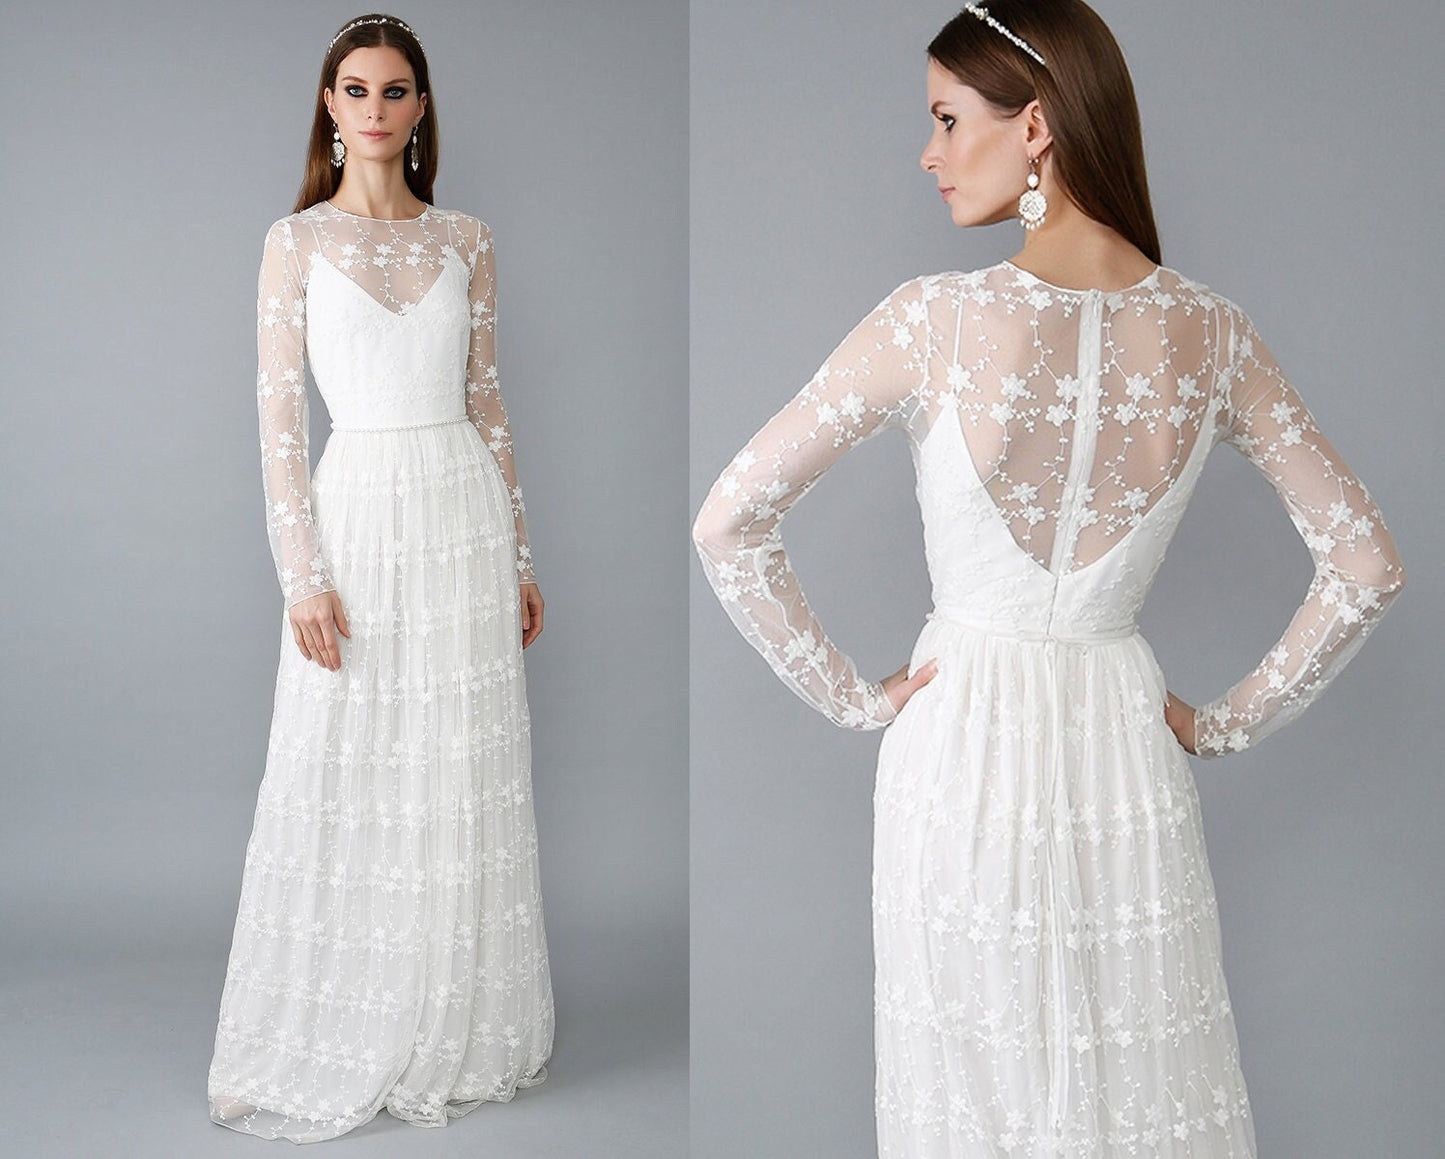 Long sleeve lace wedding dress/Felicia